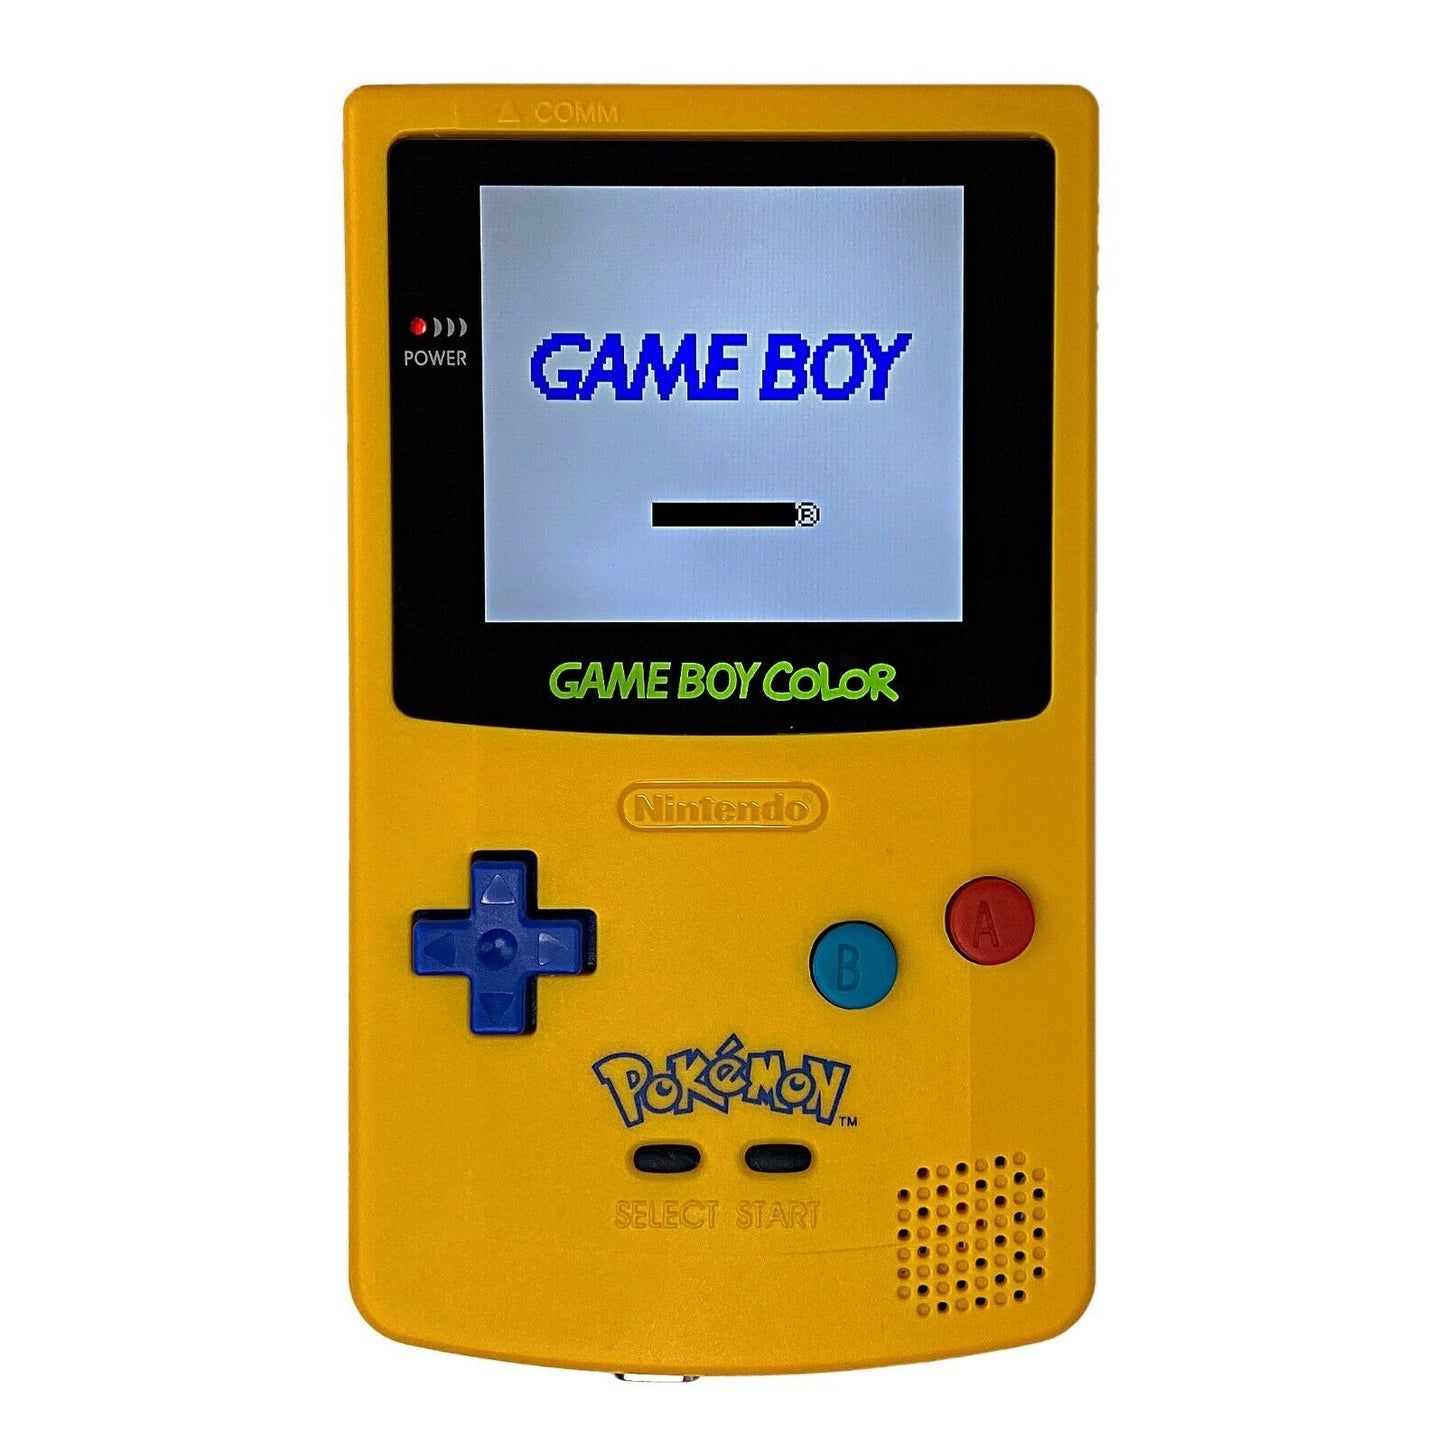 Custom Gameboy Color IPS 5 Screen Pokemon Yellow/Blue (Gameboy Color)